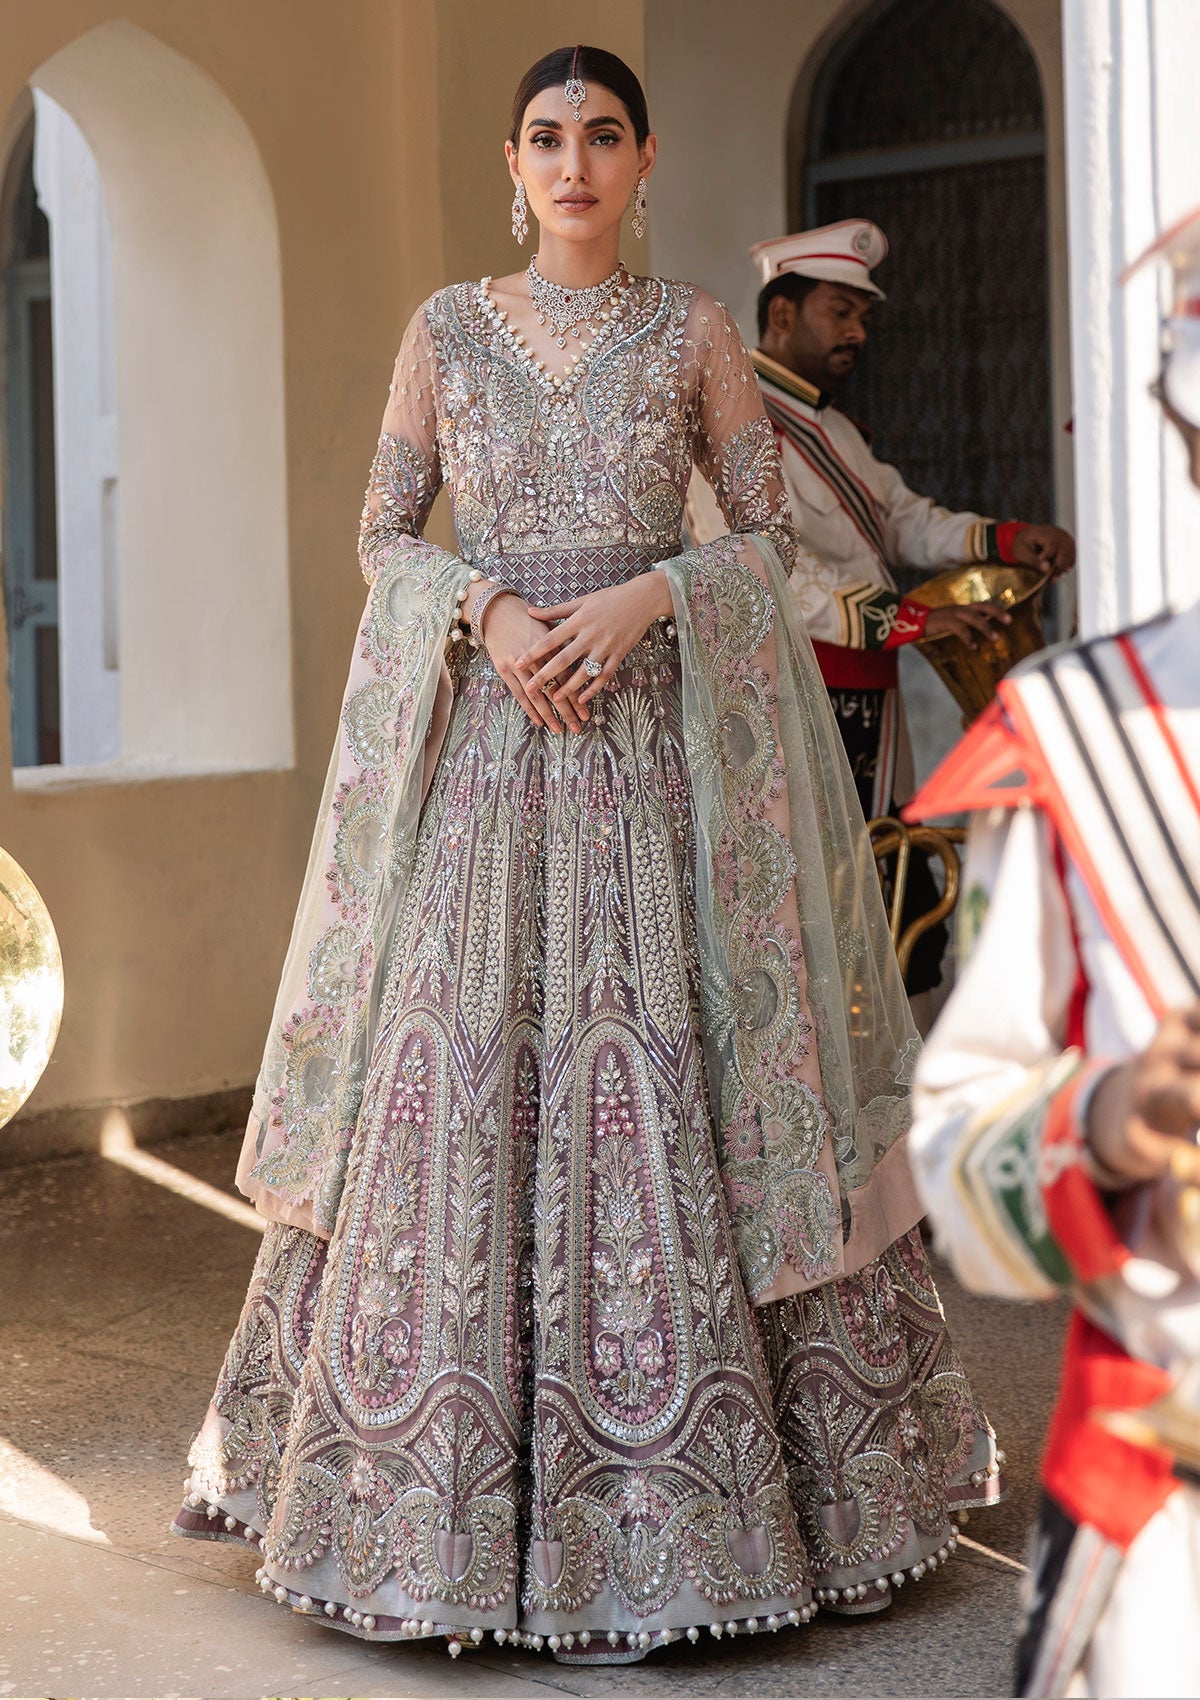 Kiara Advani Wedding inspired Mehndi Design | kiara Sidharth wedding |  kiara advani mehndi design - YouTube